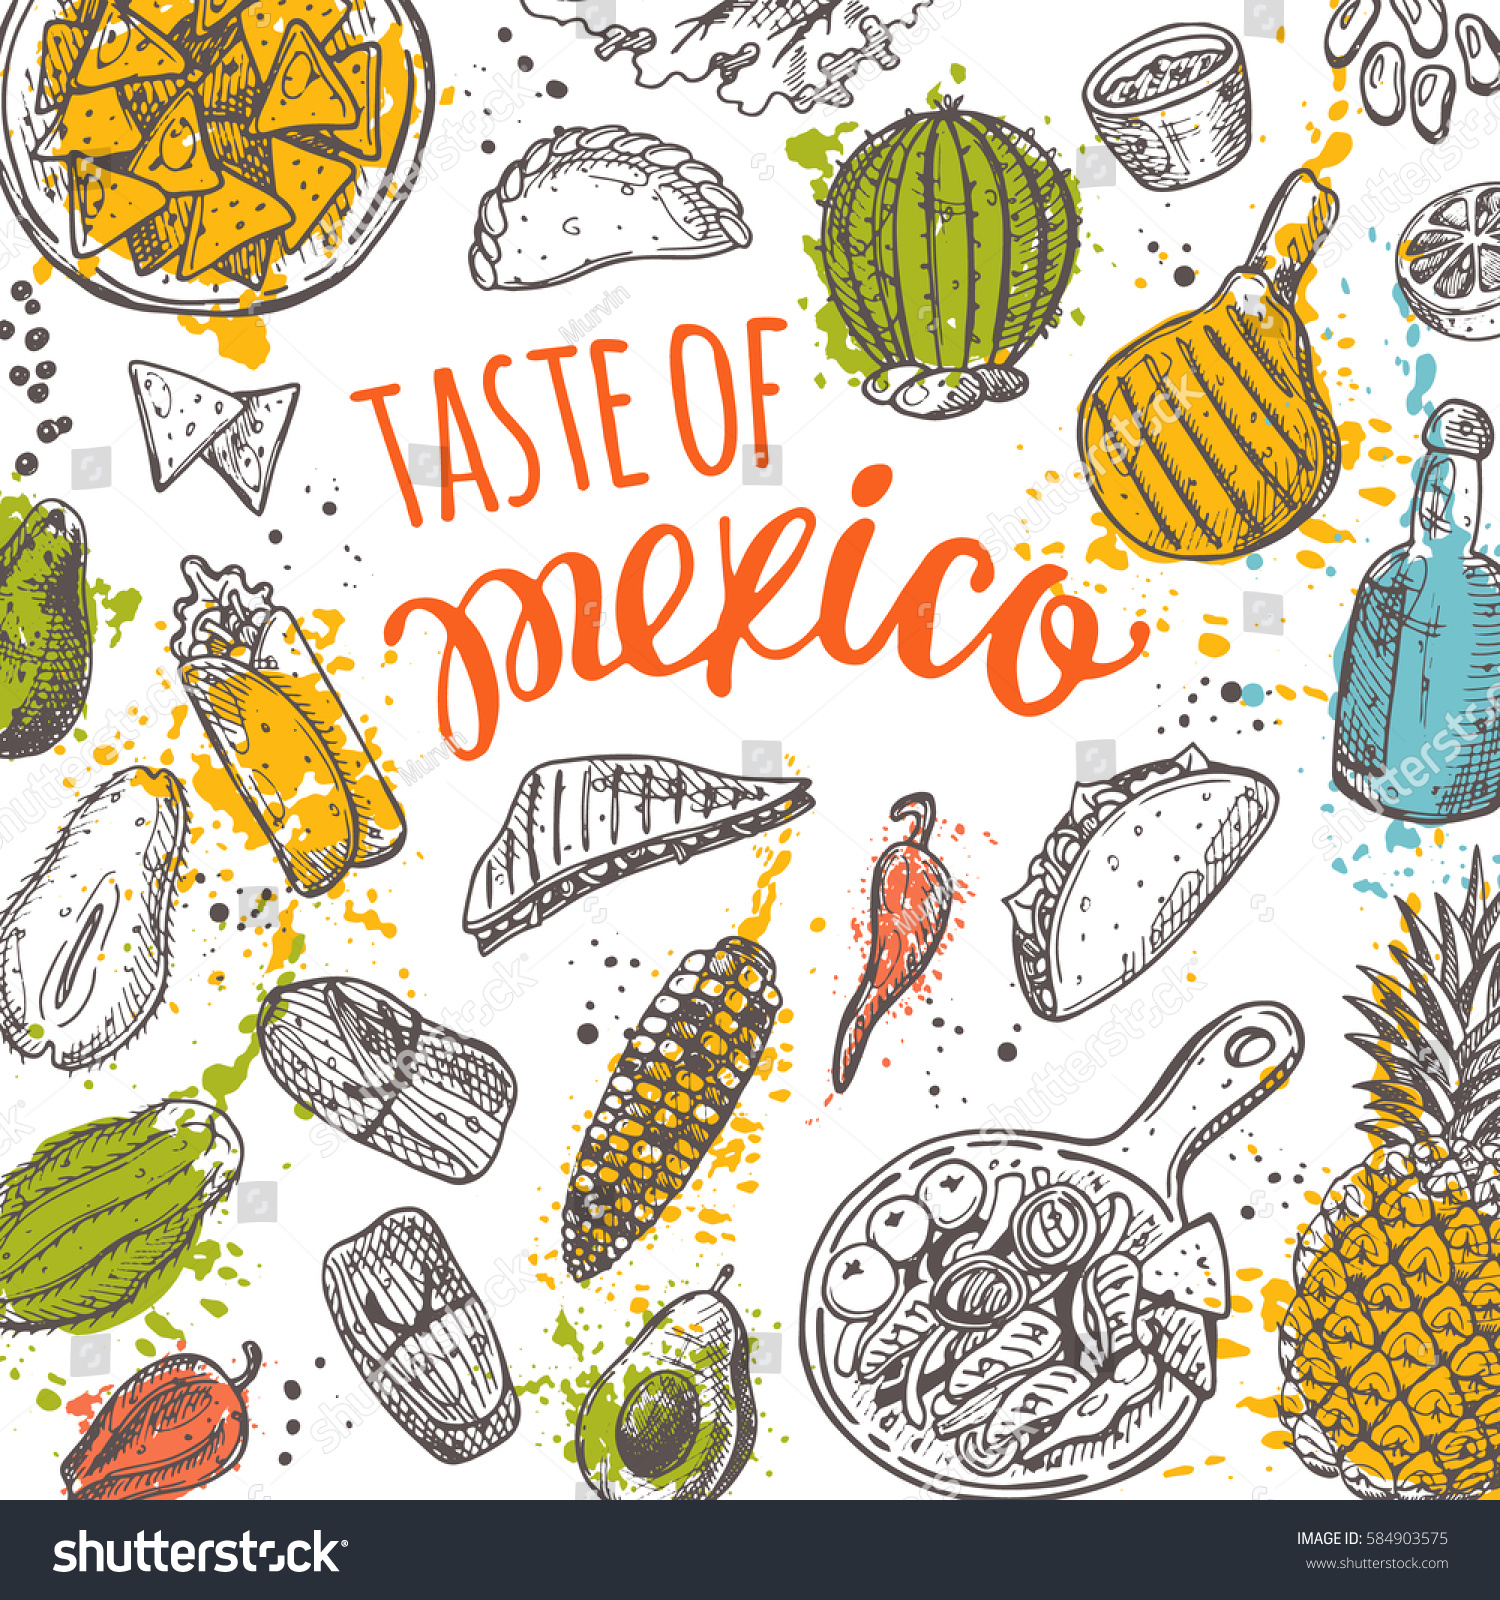 SVG of Taste of Mexico. National cuisine. Hand drawn vector illustration on the watercolor splashes. Tamales, empanadas, enchilada, quesadilla, chili con carne, tacos, burrito, salsa, guacamole dip, fajitas. svg